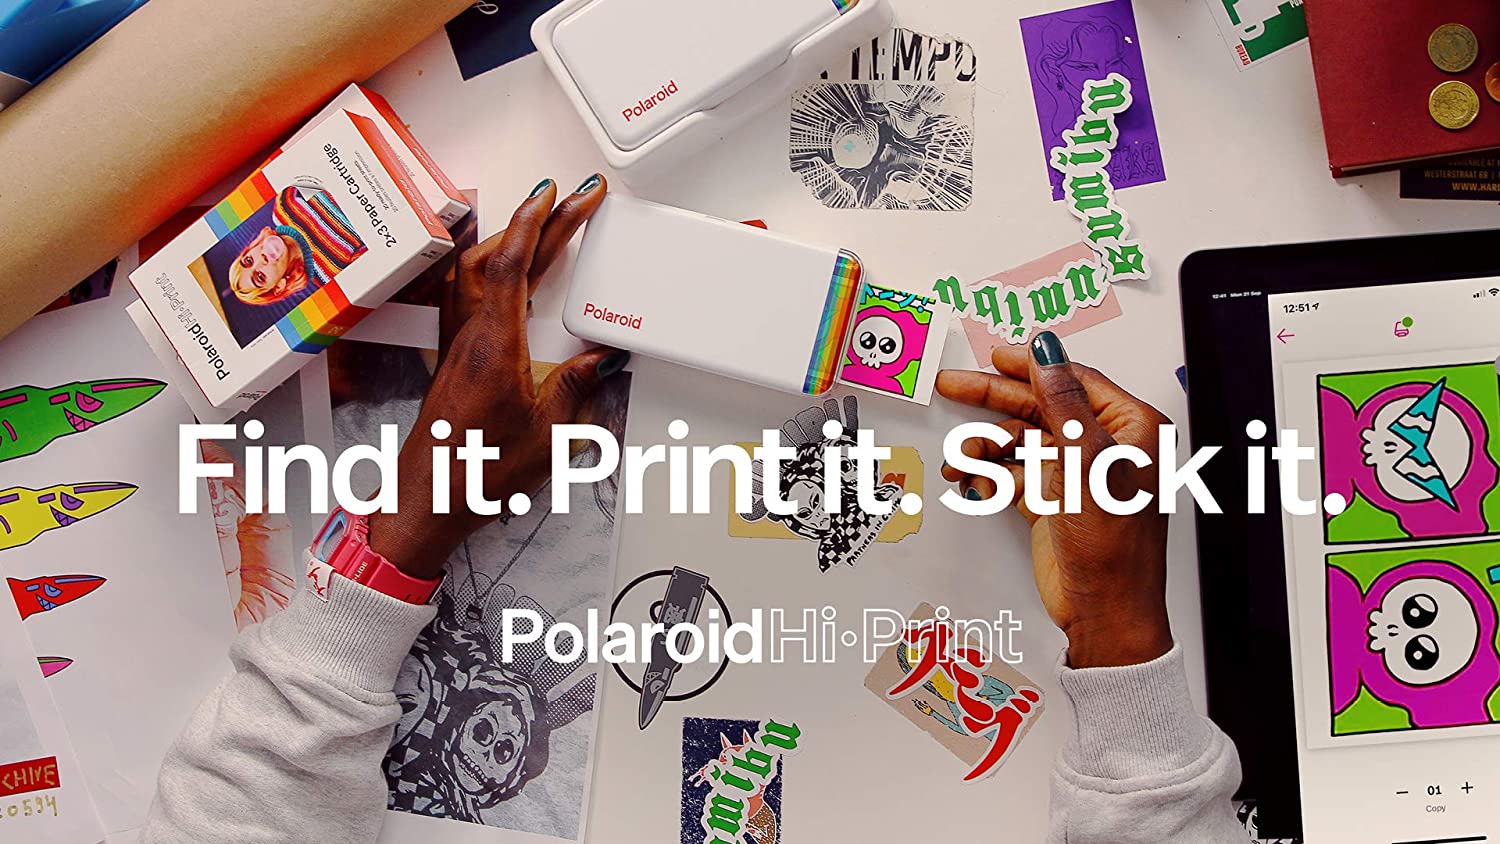 Polaroid Hi-Print 2x3 Pocket Photo Printer User Guide